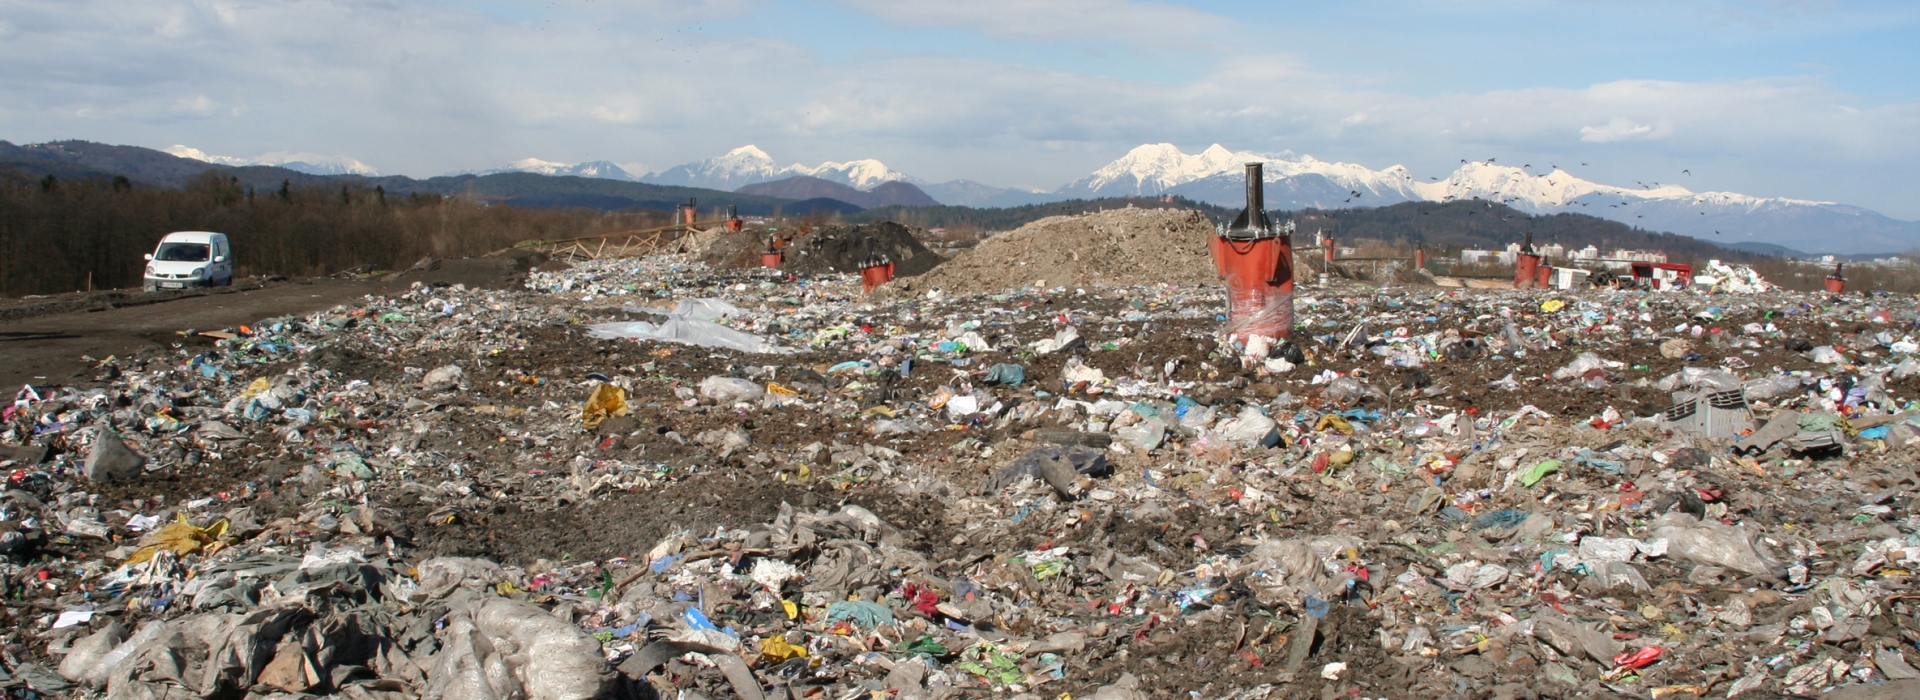 Landfill and composting facilities